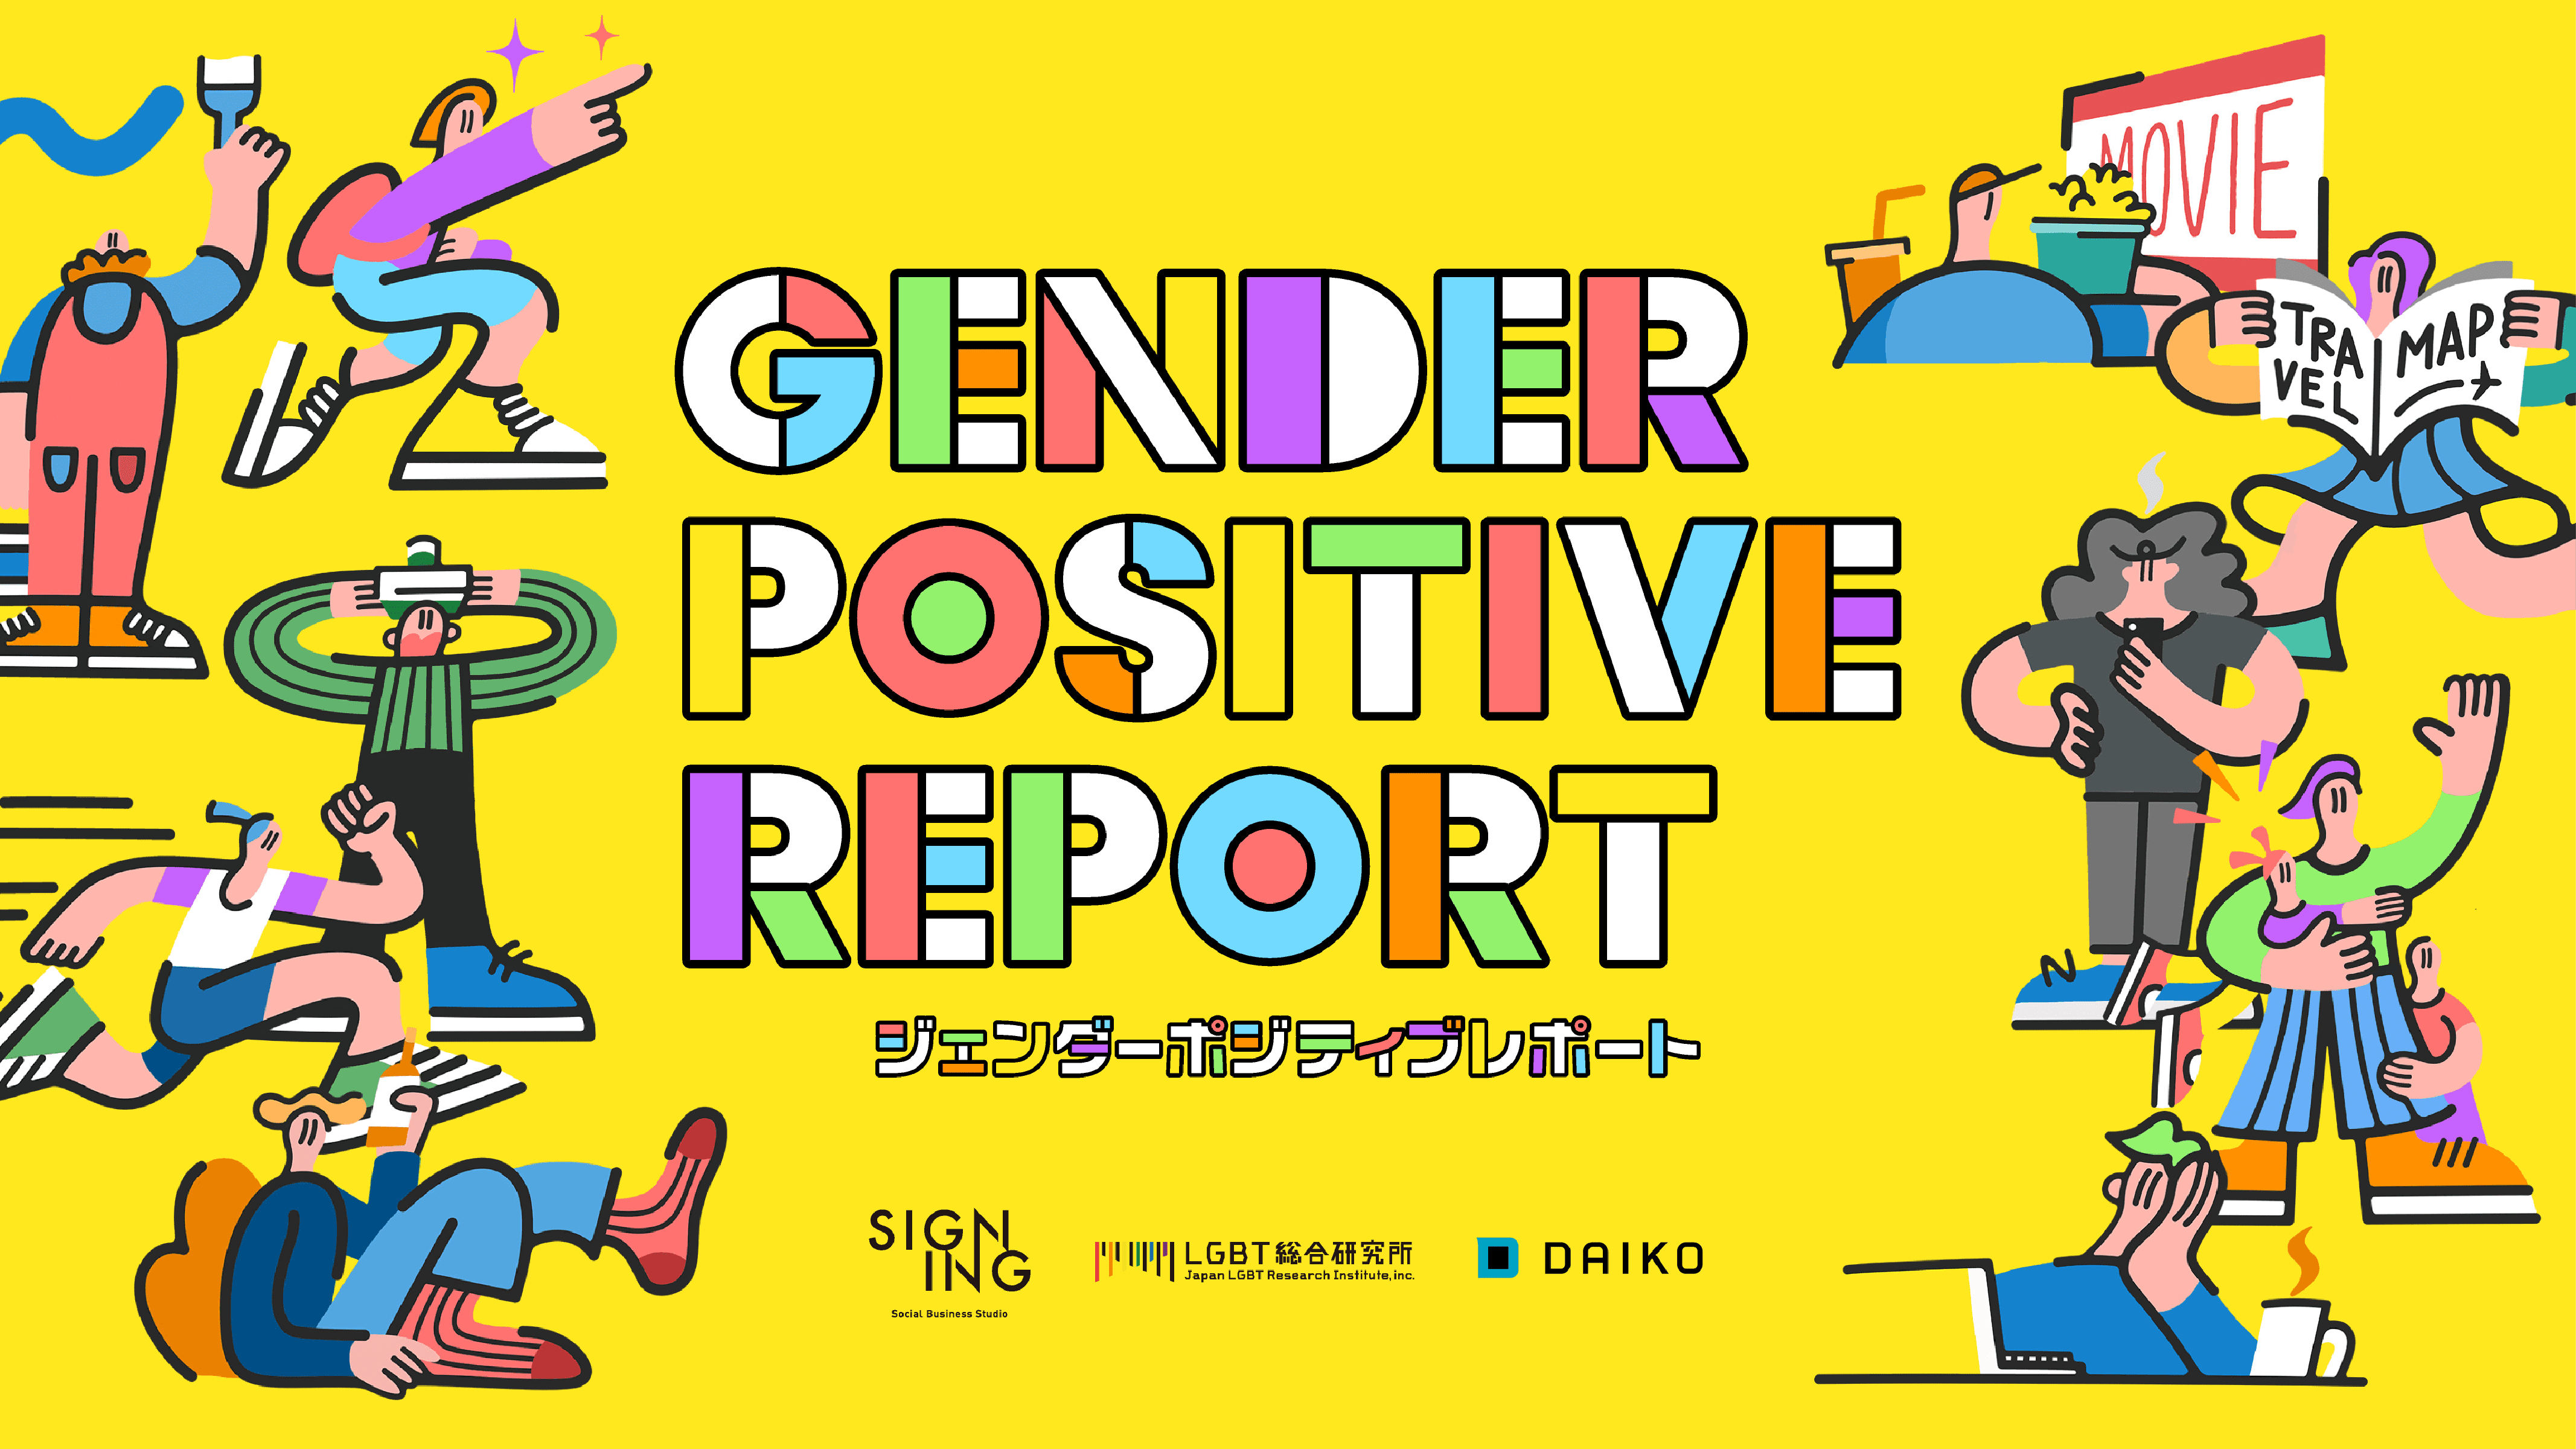 GENDER POSITIVE REPORT
～ジェンダーポジティブレポート～  を公開しました。